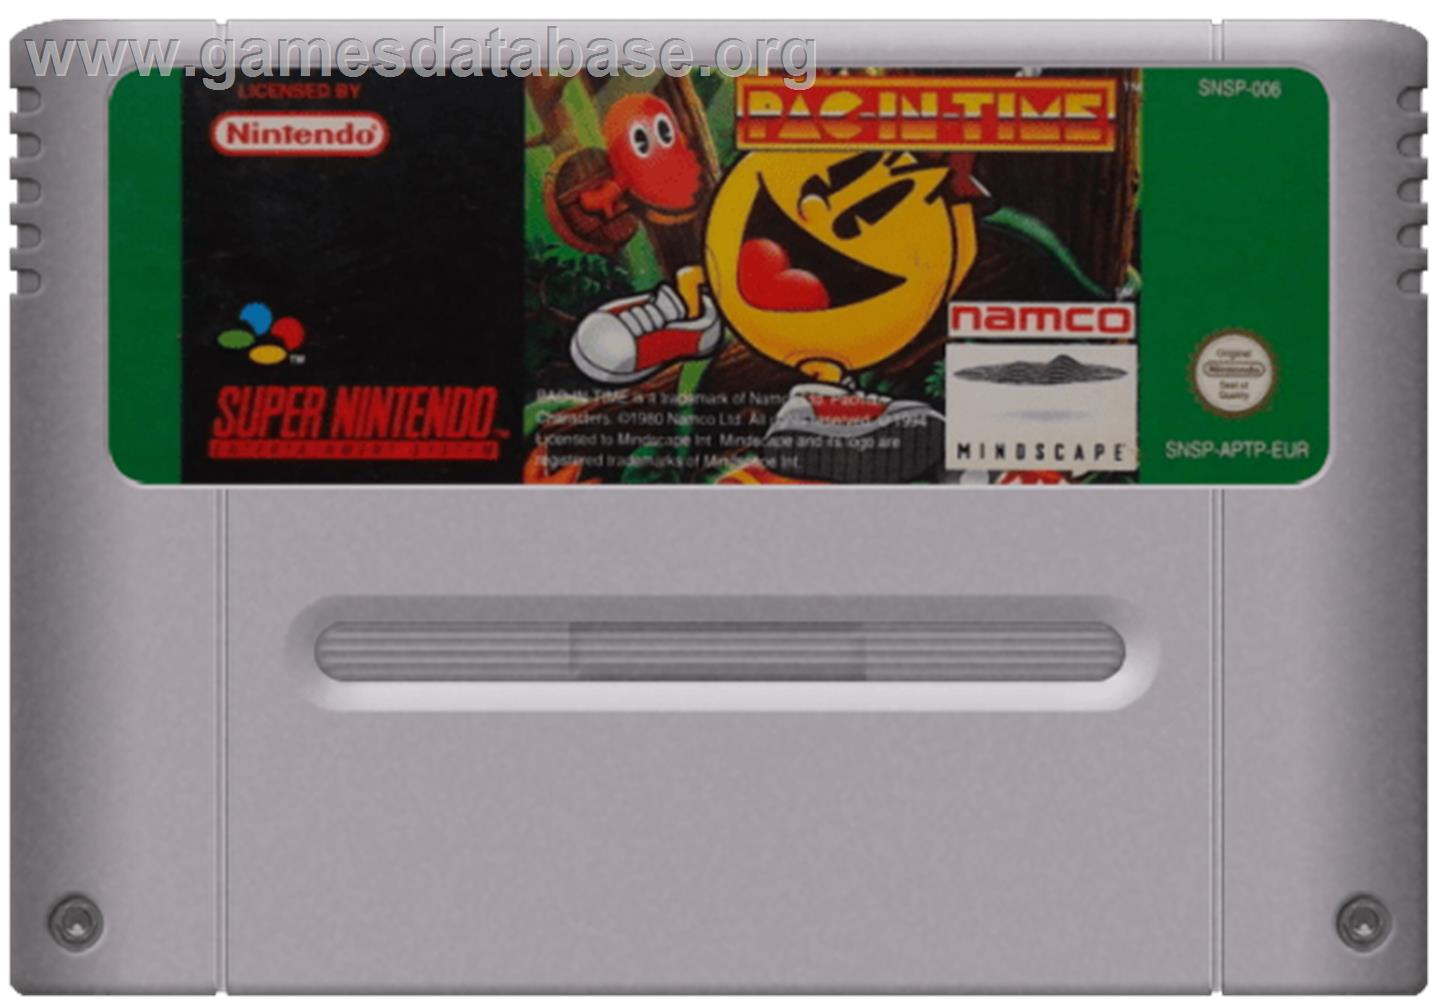 Pac-in-Time - Nintendo SNES - Artwork - Cartridge